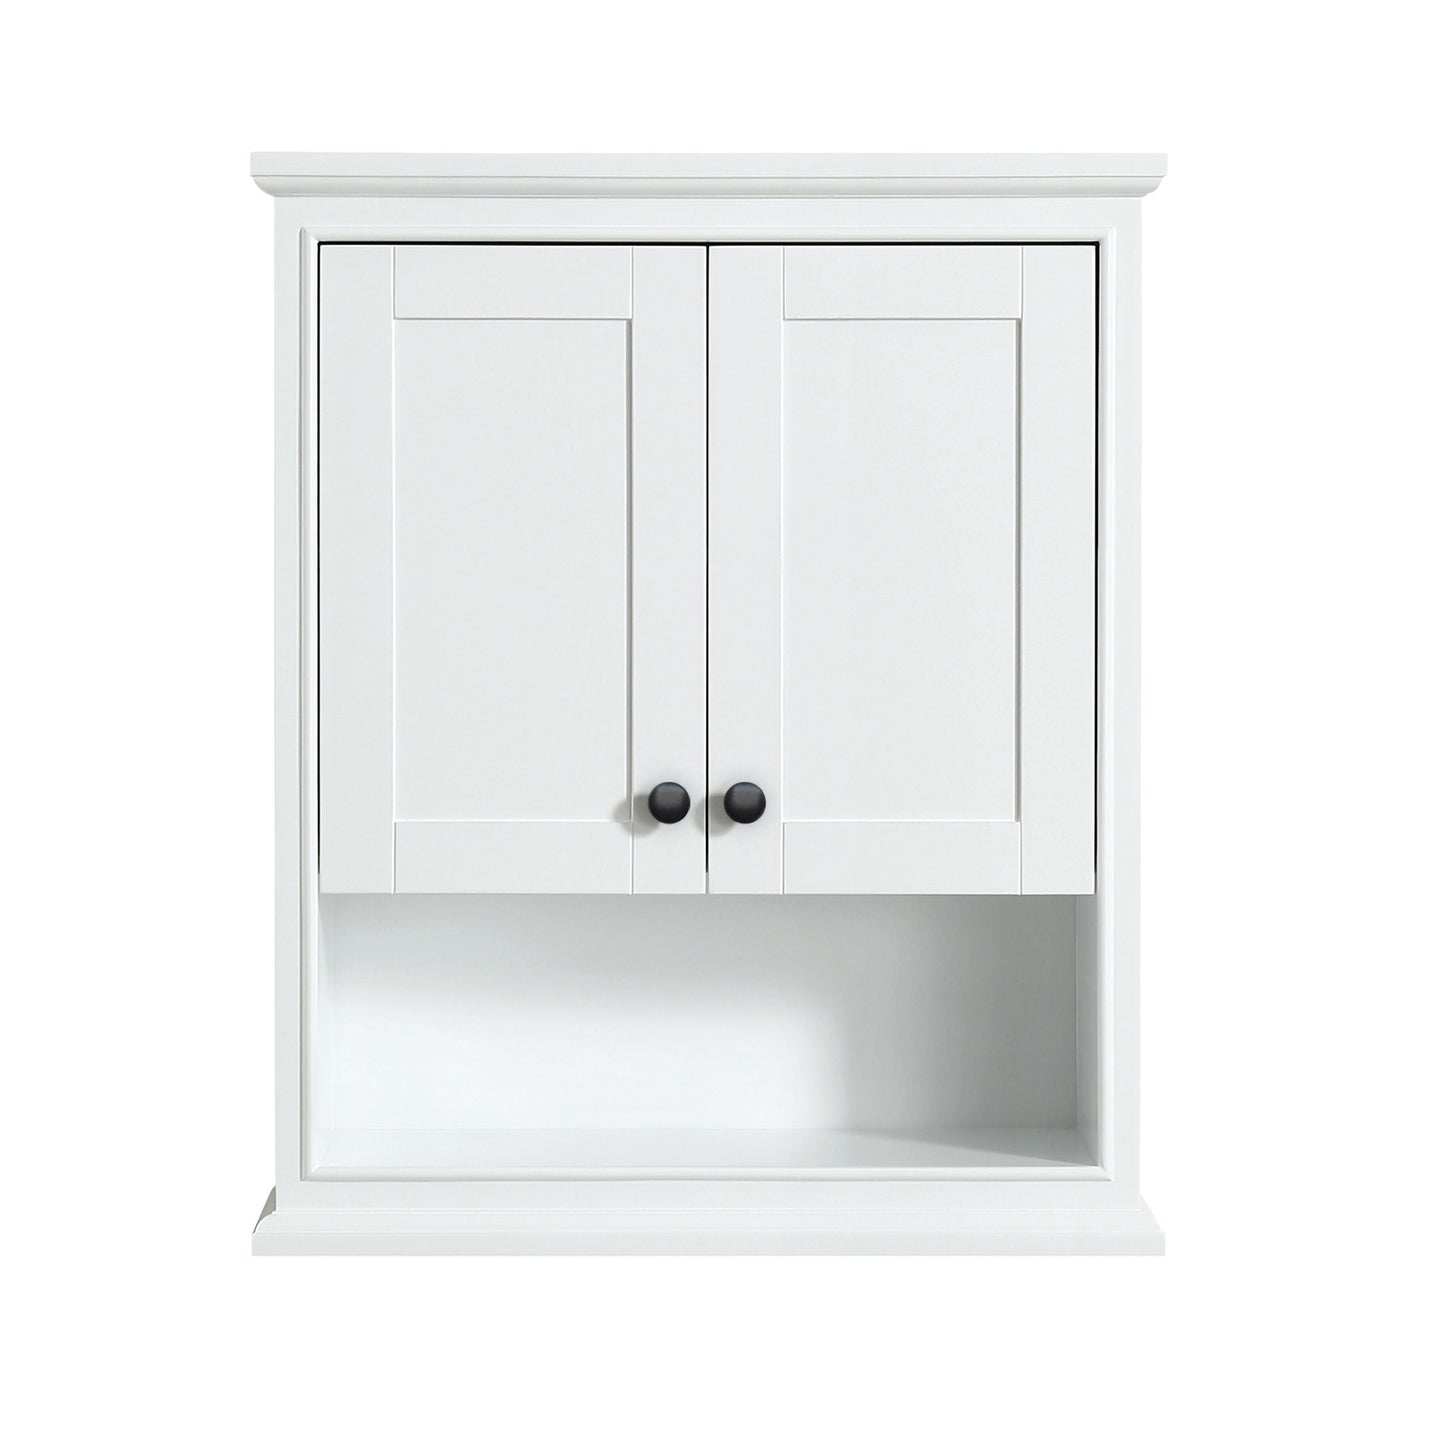 Wyndham Deborah Over-the-Toilet Bathroom Wall-Mounted Storage Cabinet with Matte Black Trim - Luxe Bathroom Vanities